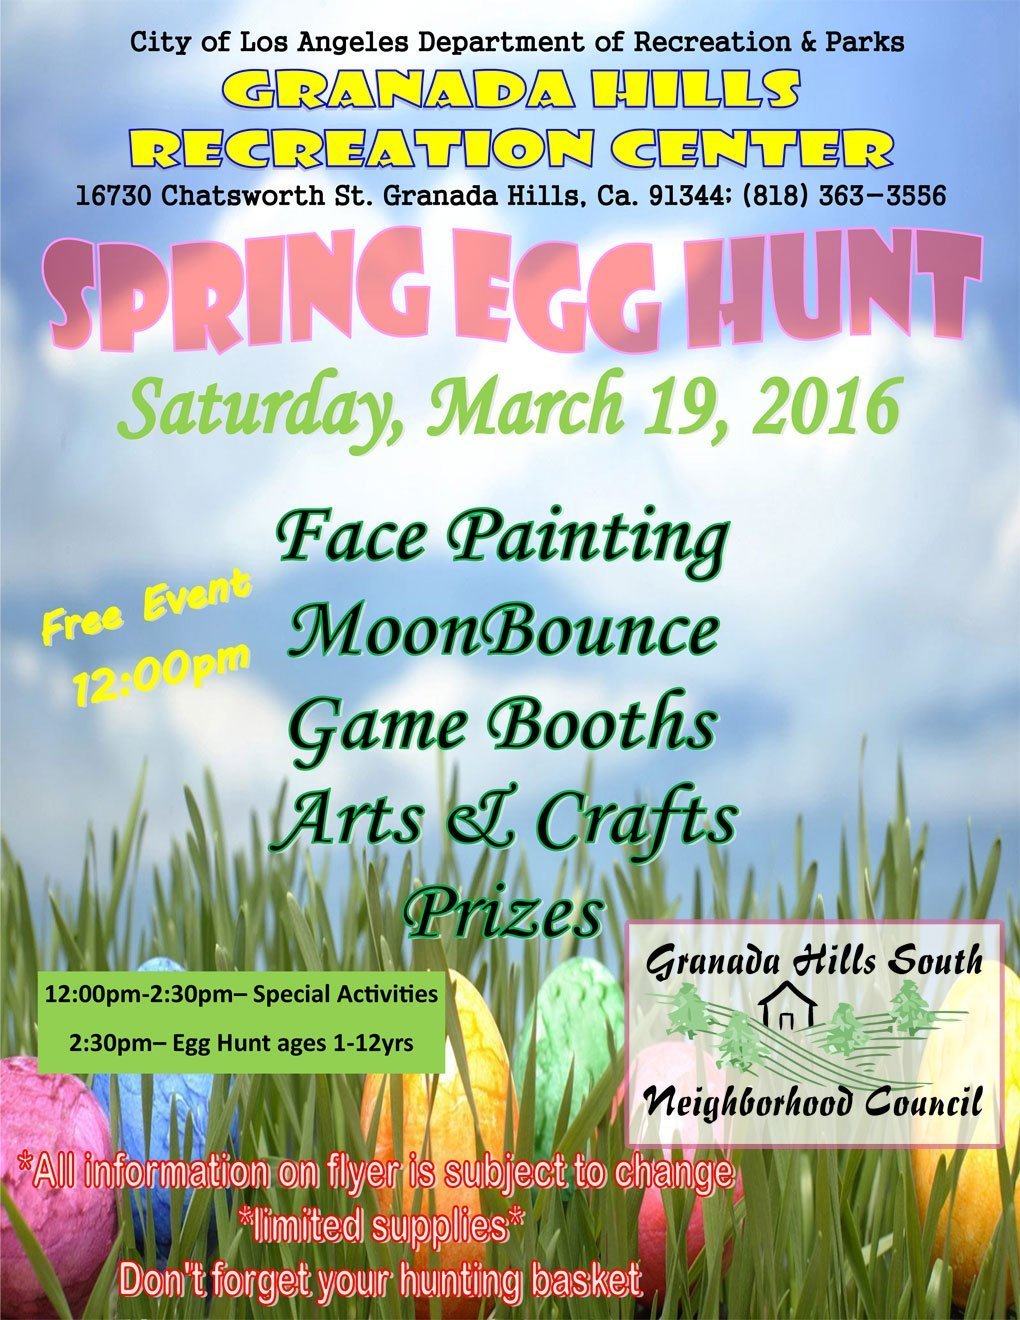 Granada Hills Spring Egg Hunt – Saturday, March 19